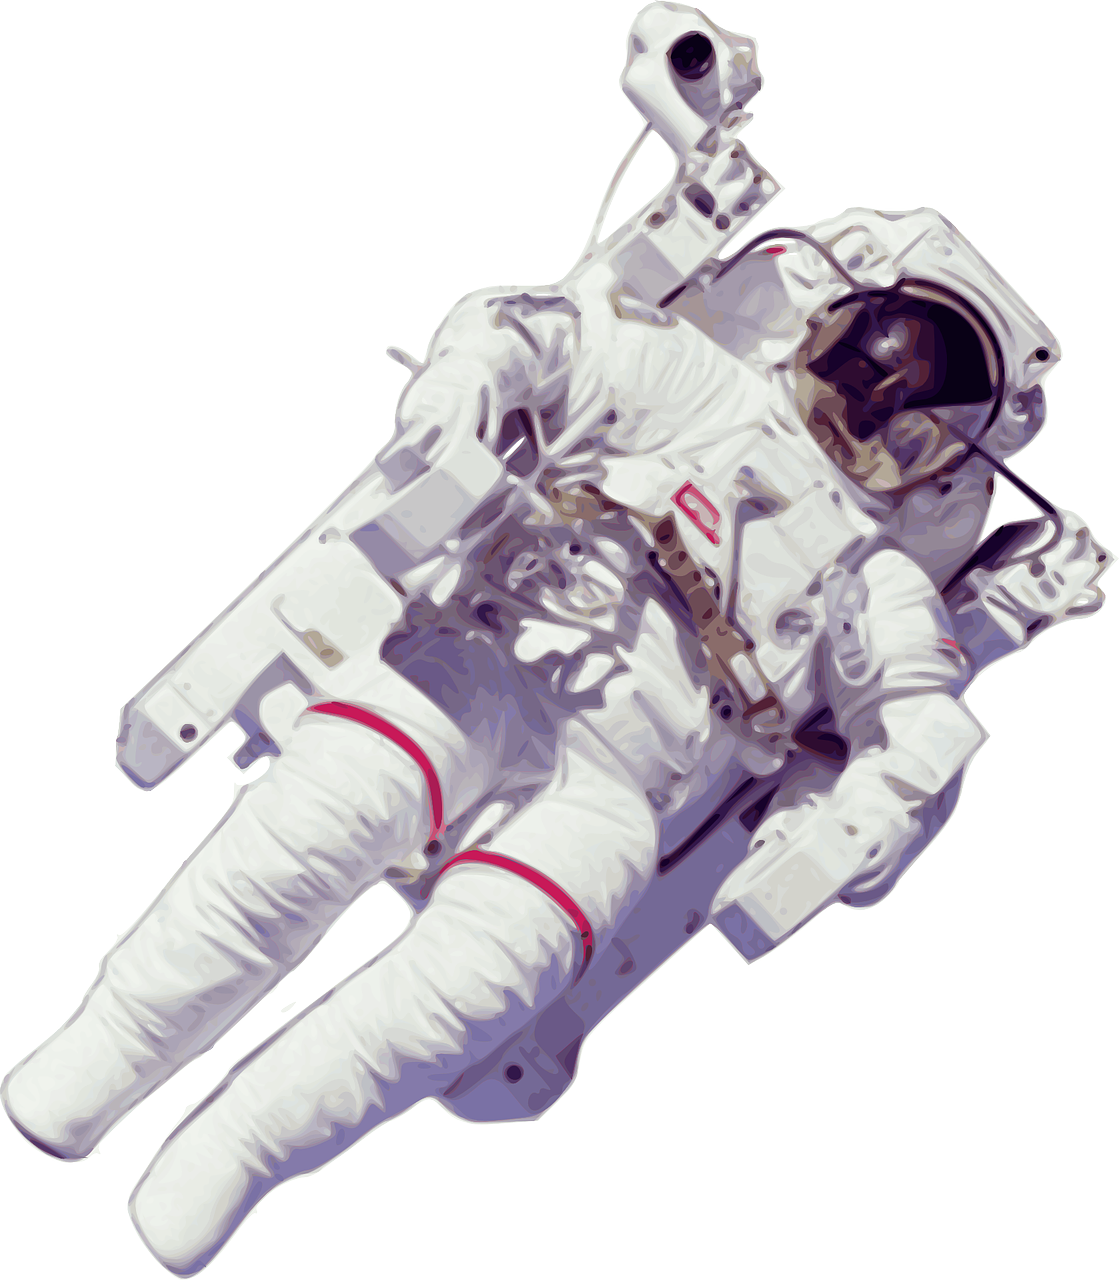 astronaut picture